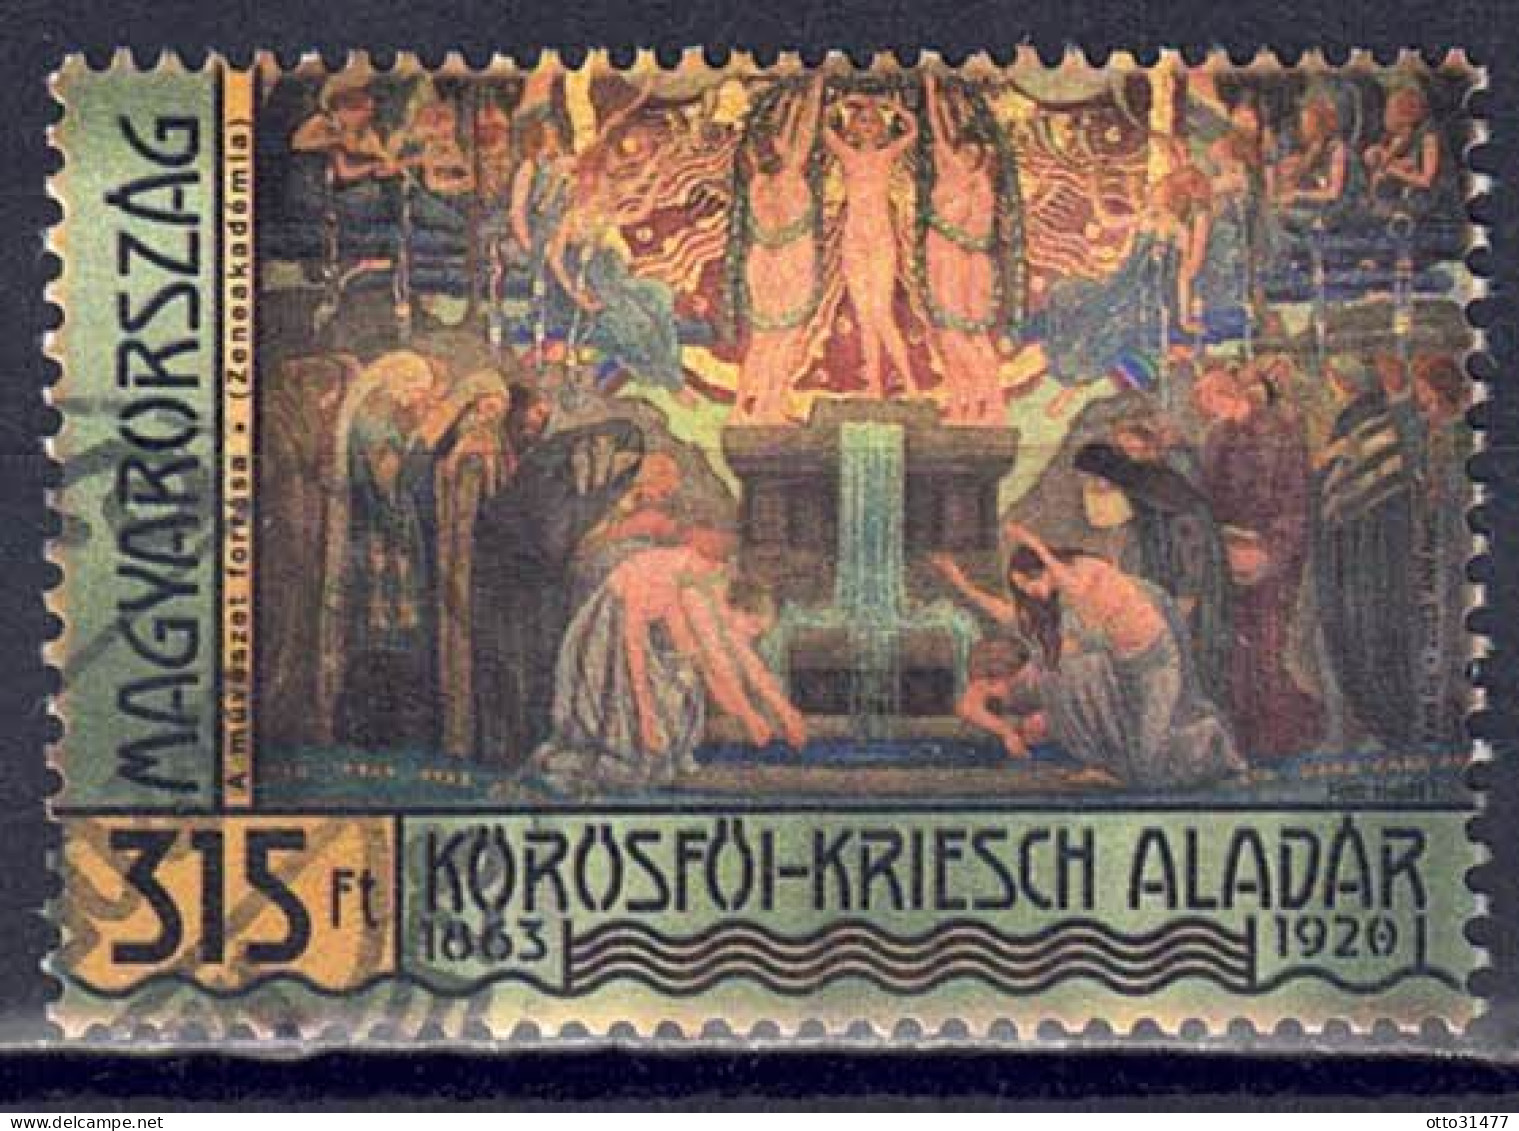 Ungarn 2013 - Aladár Körösföi-Kriesch, Nr. 5657, Gestempelt / Used - Used Stamps